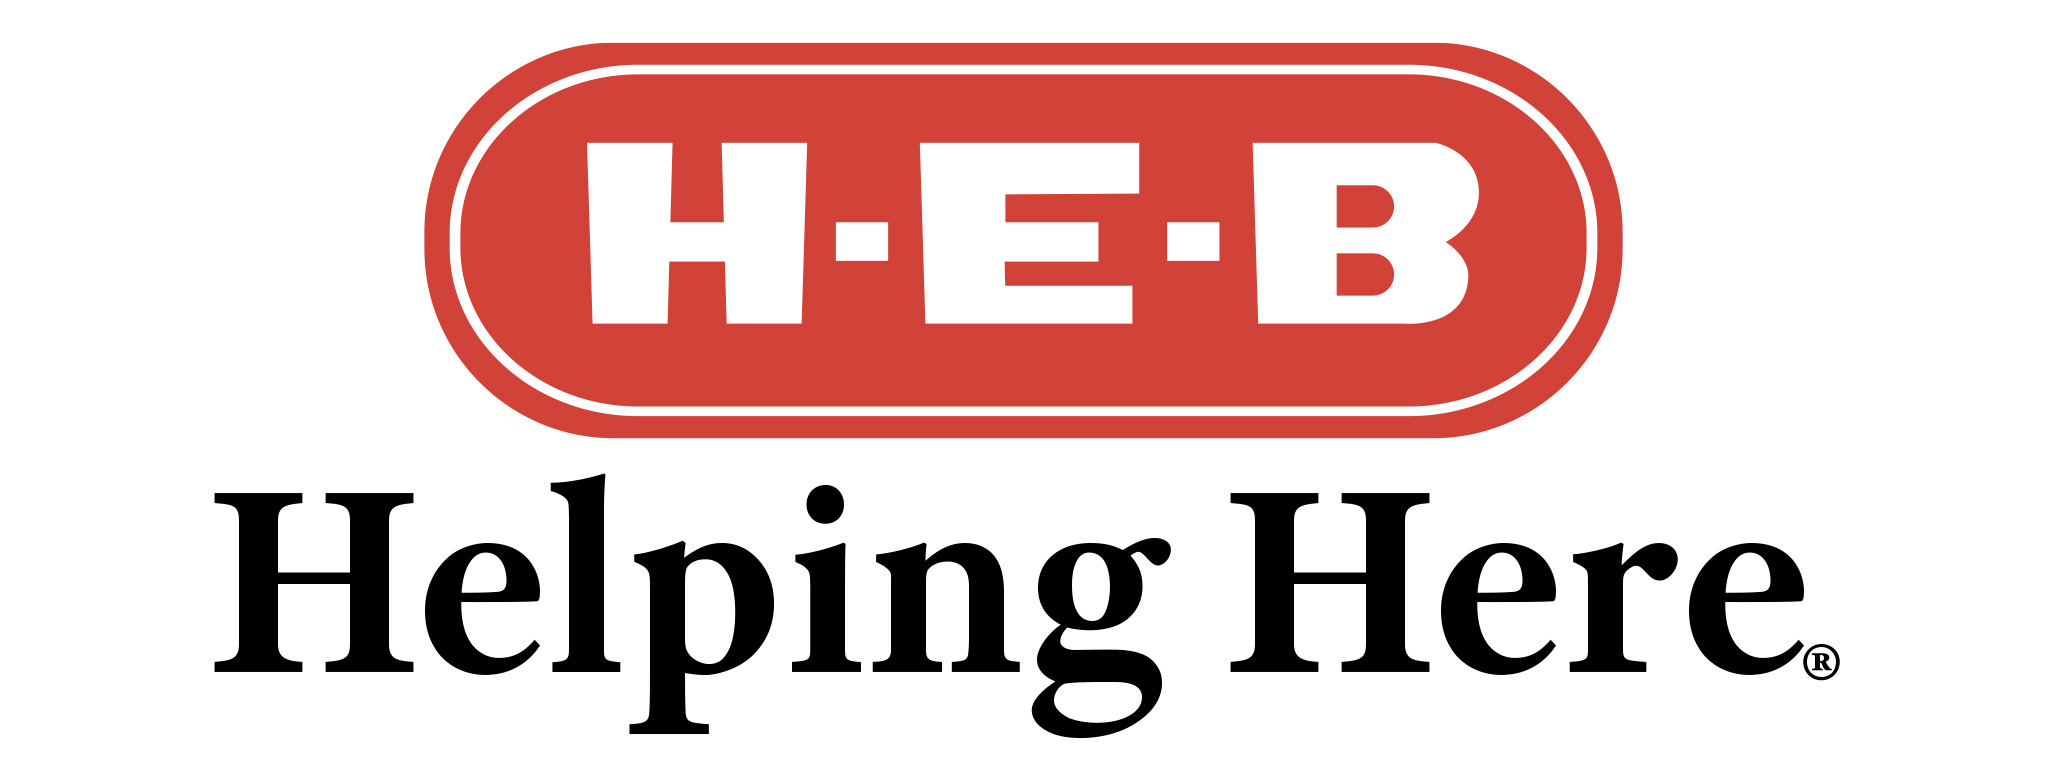 H.E.B. Helpling Here